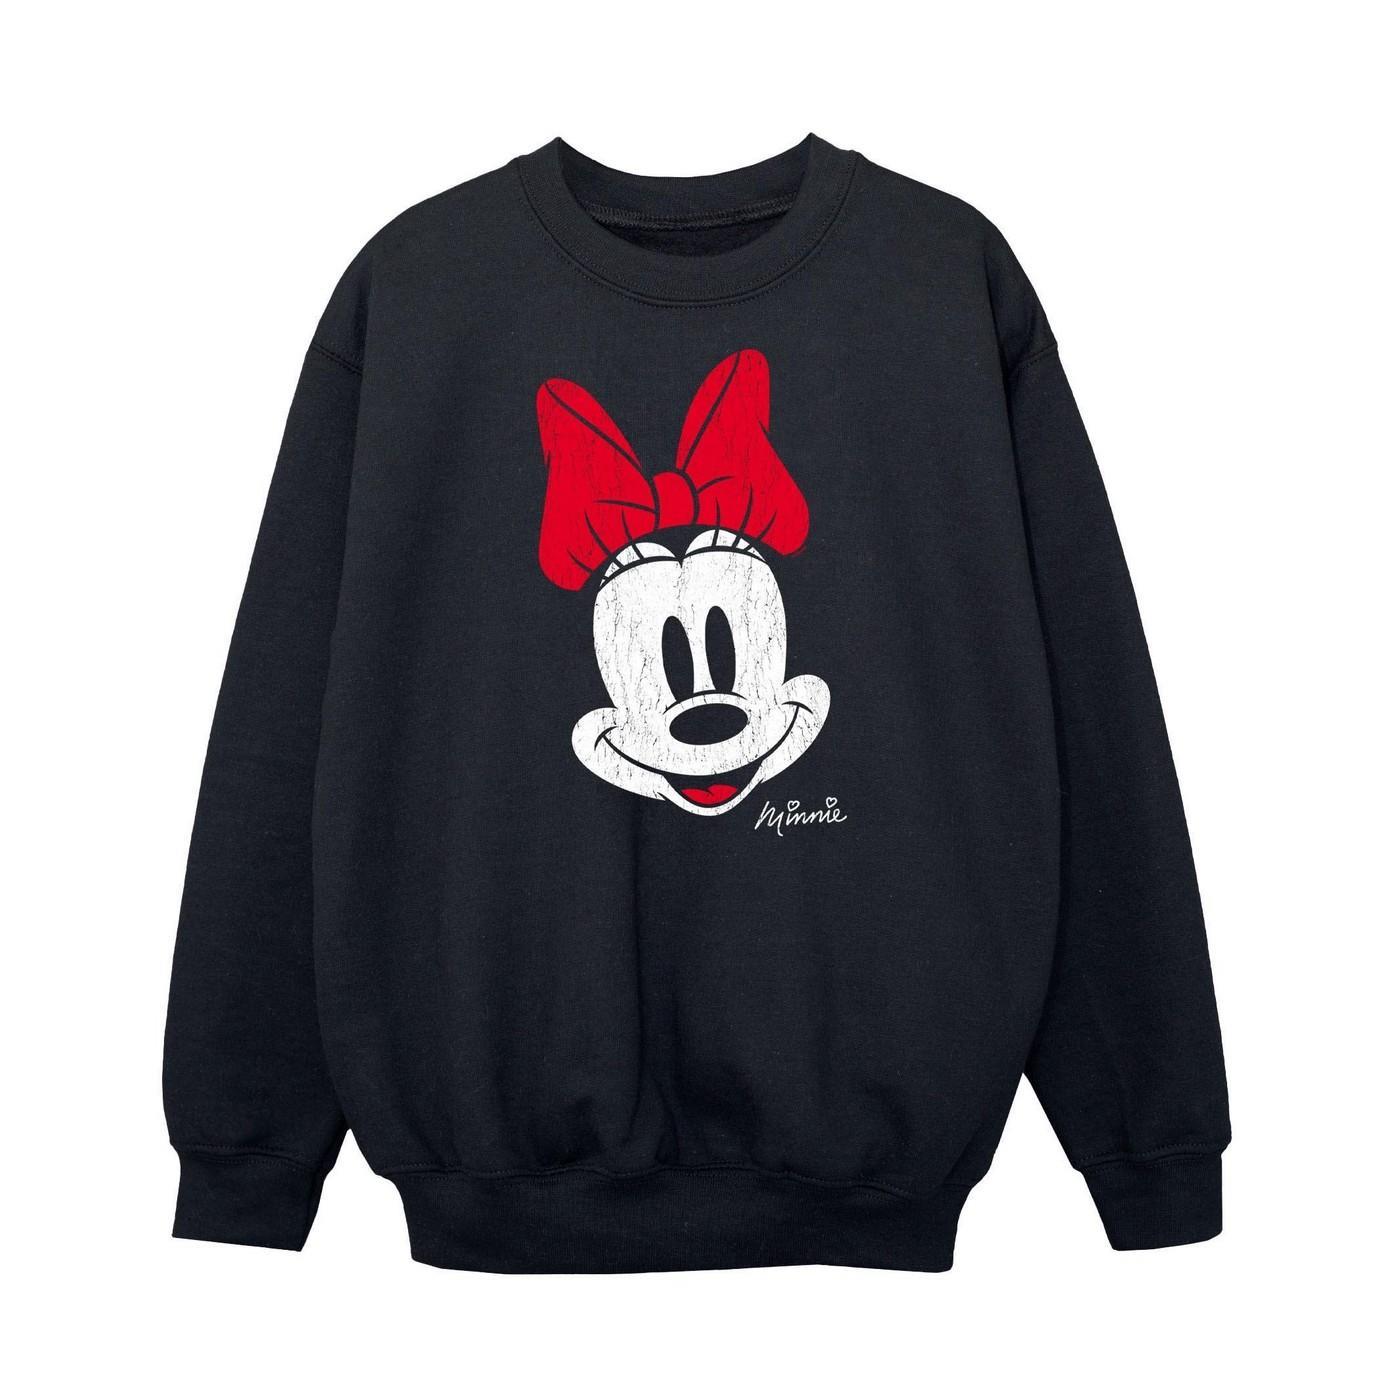 Disney Girls Minnie Mouse Face Sweatshirt (Black) (7-8 Years)